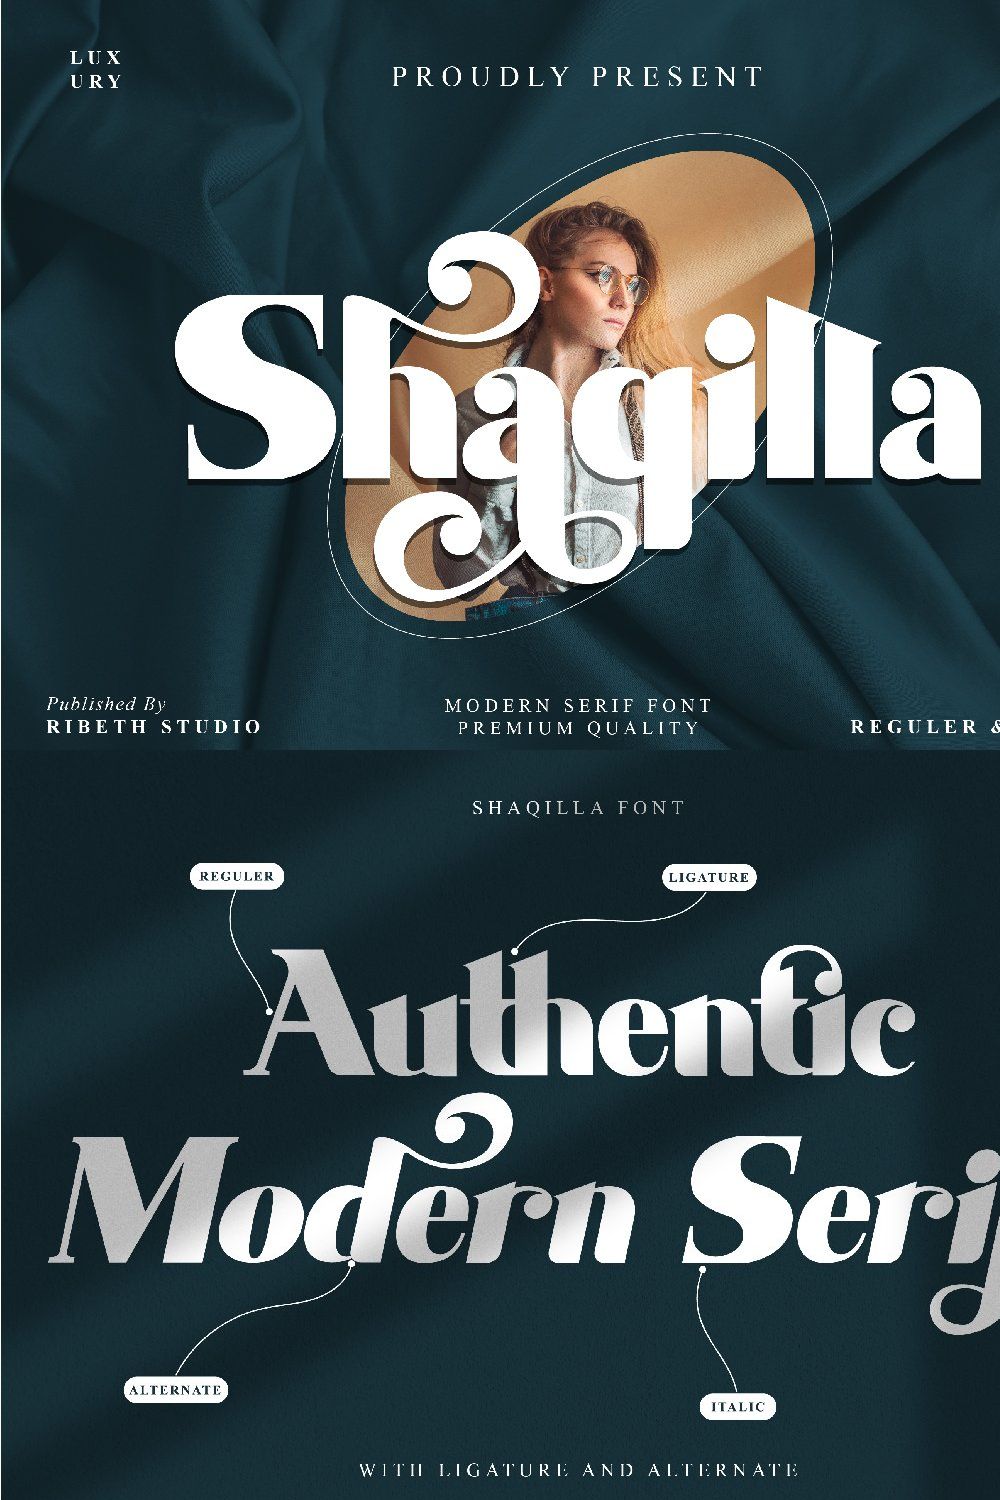 Shaqilla - modern serif pinterest preview image.